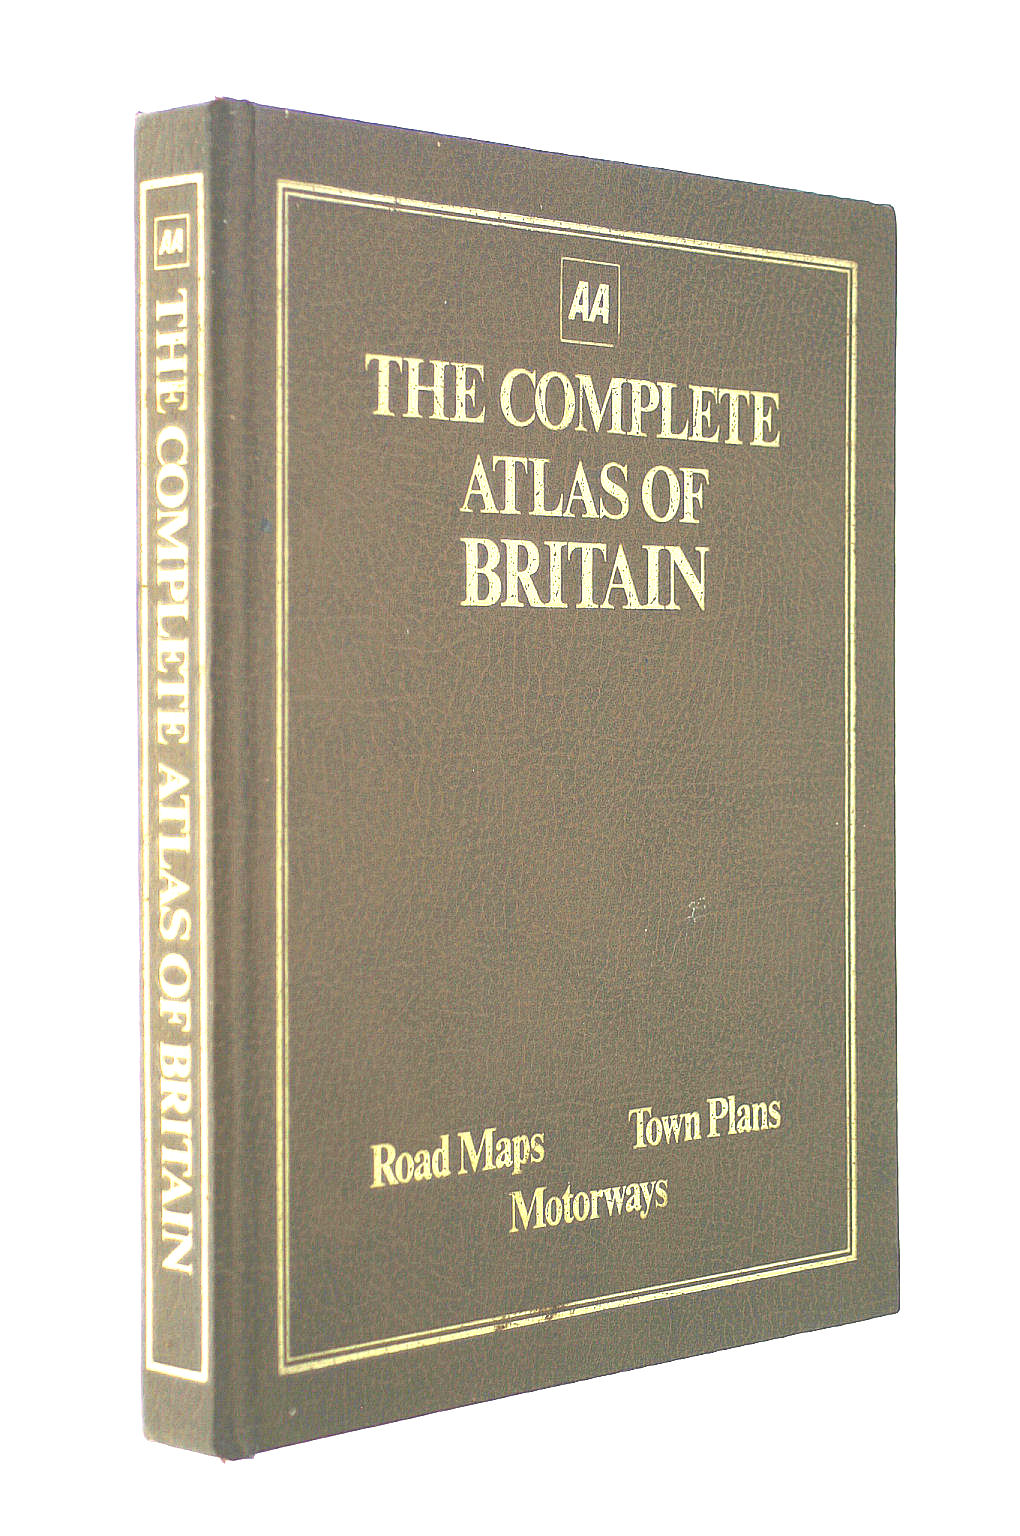 AUTOMOBILE ASSOCIATION - Complete Atlas of Britain